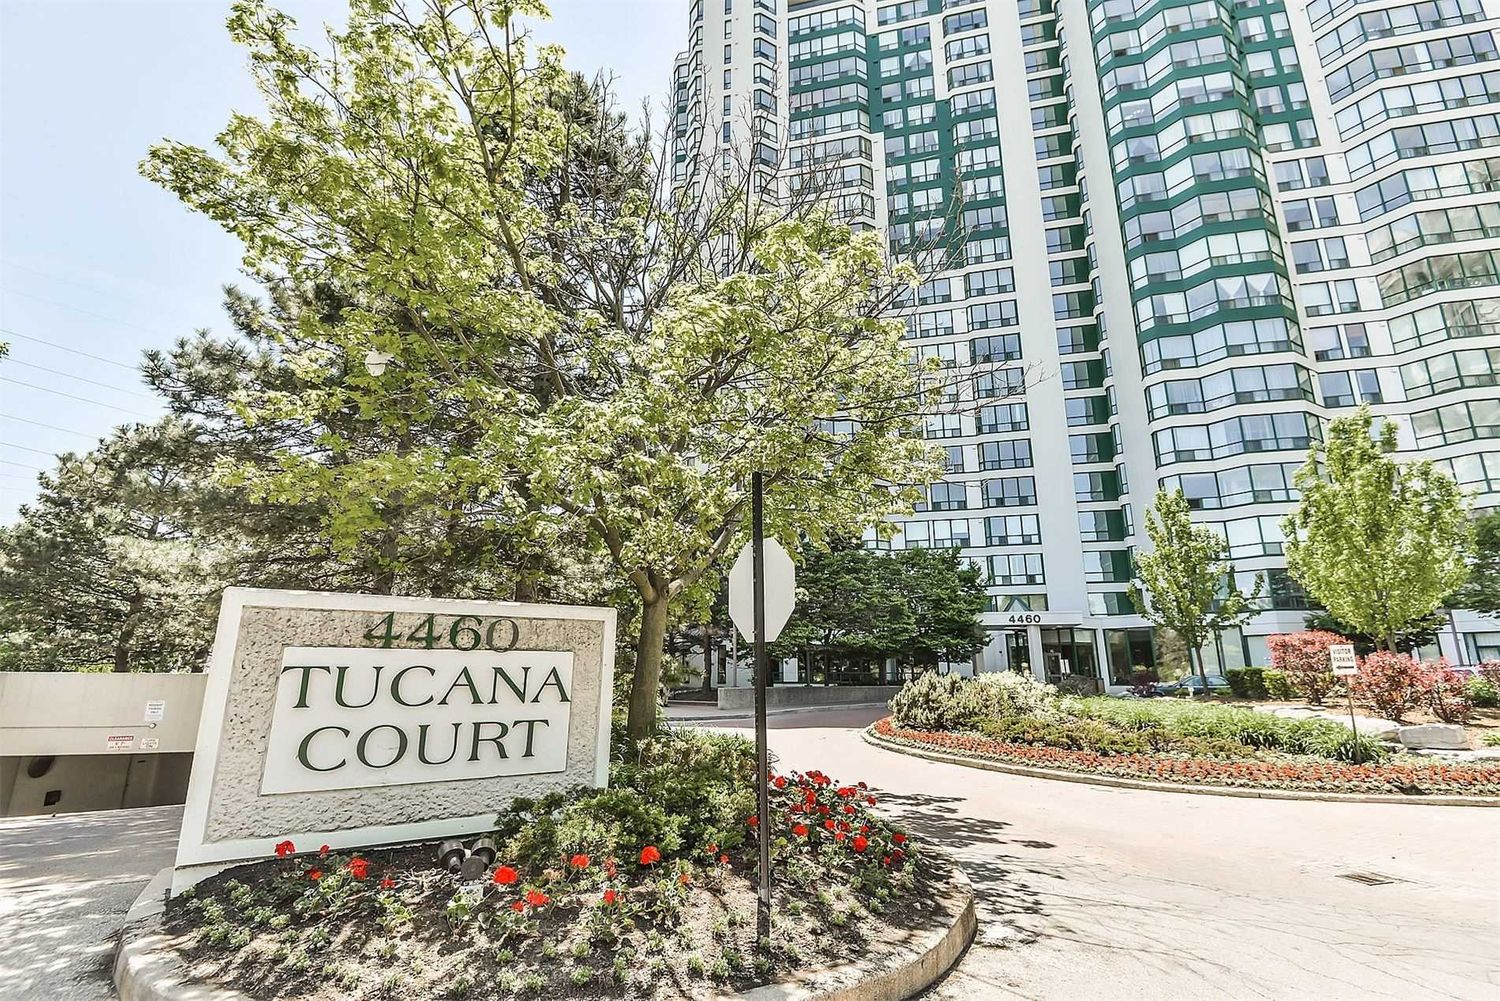 4460 Tucana Court. Kingsbridge Grand II Condos is located in  Mississauga, Toronto - image #2 of 3